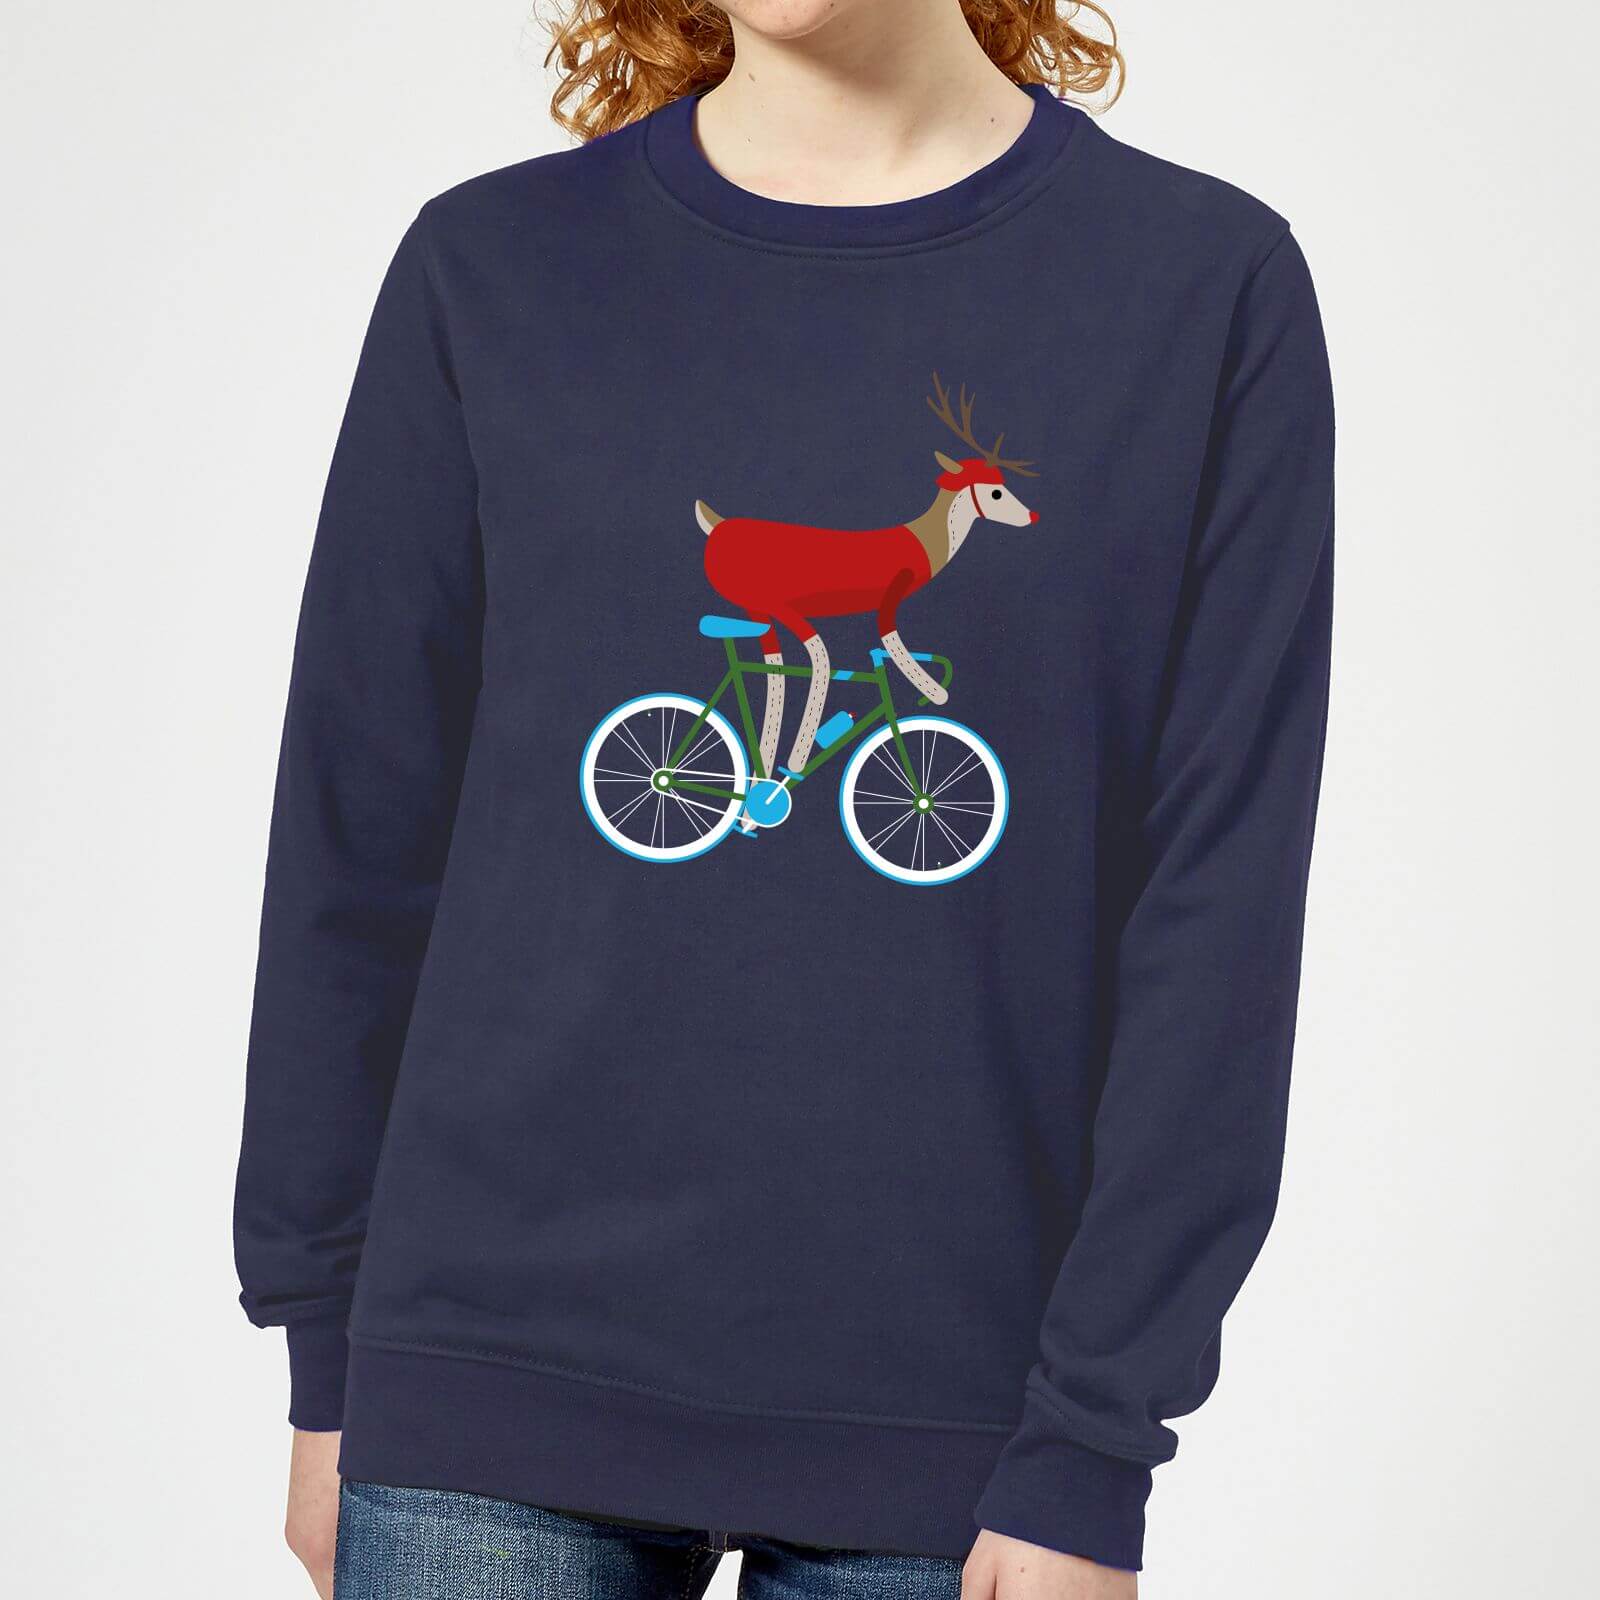 Biking Reindeer Women's Christmas Sweatshirt - Navy - XS - Navy